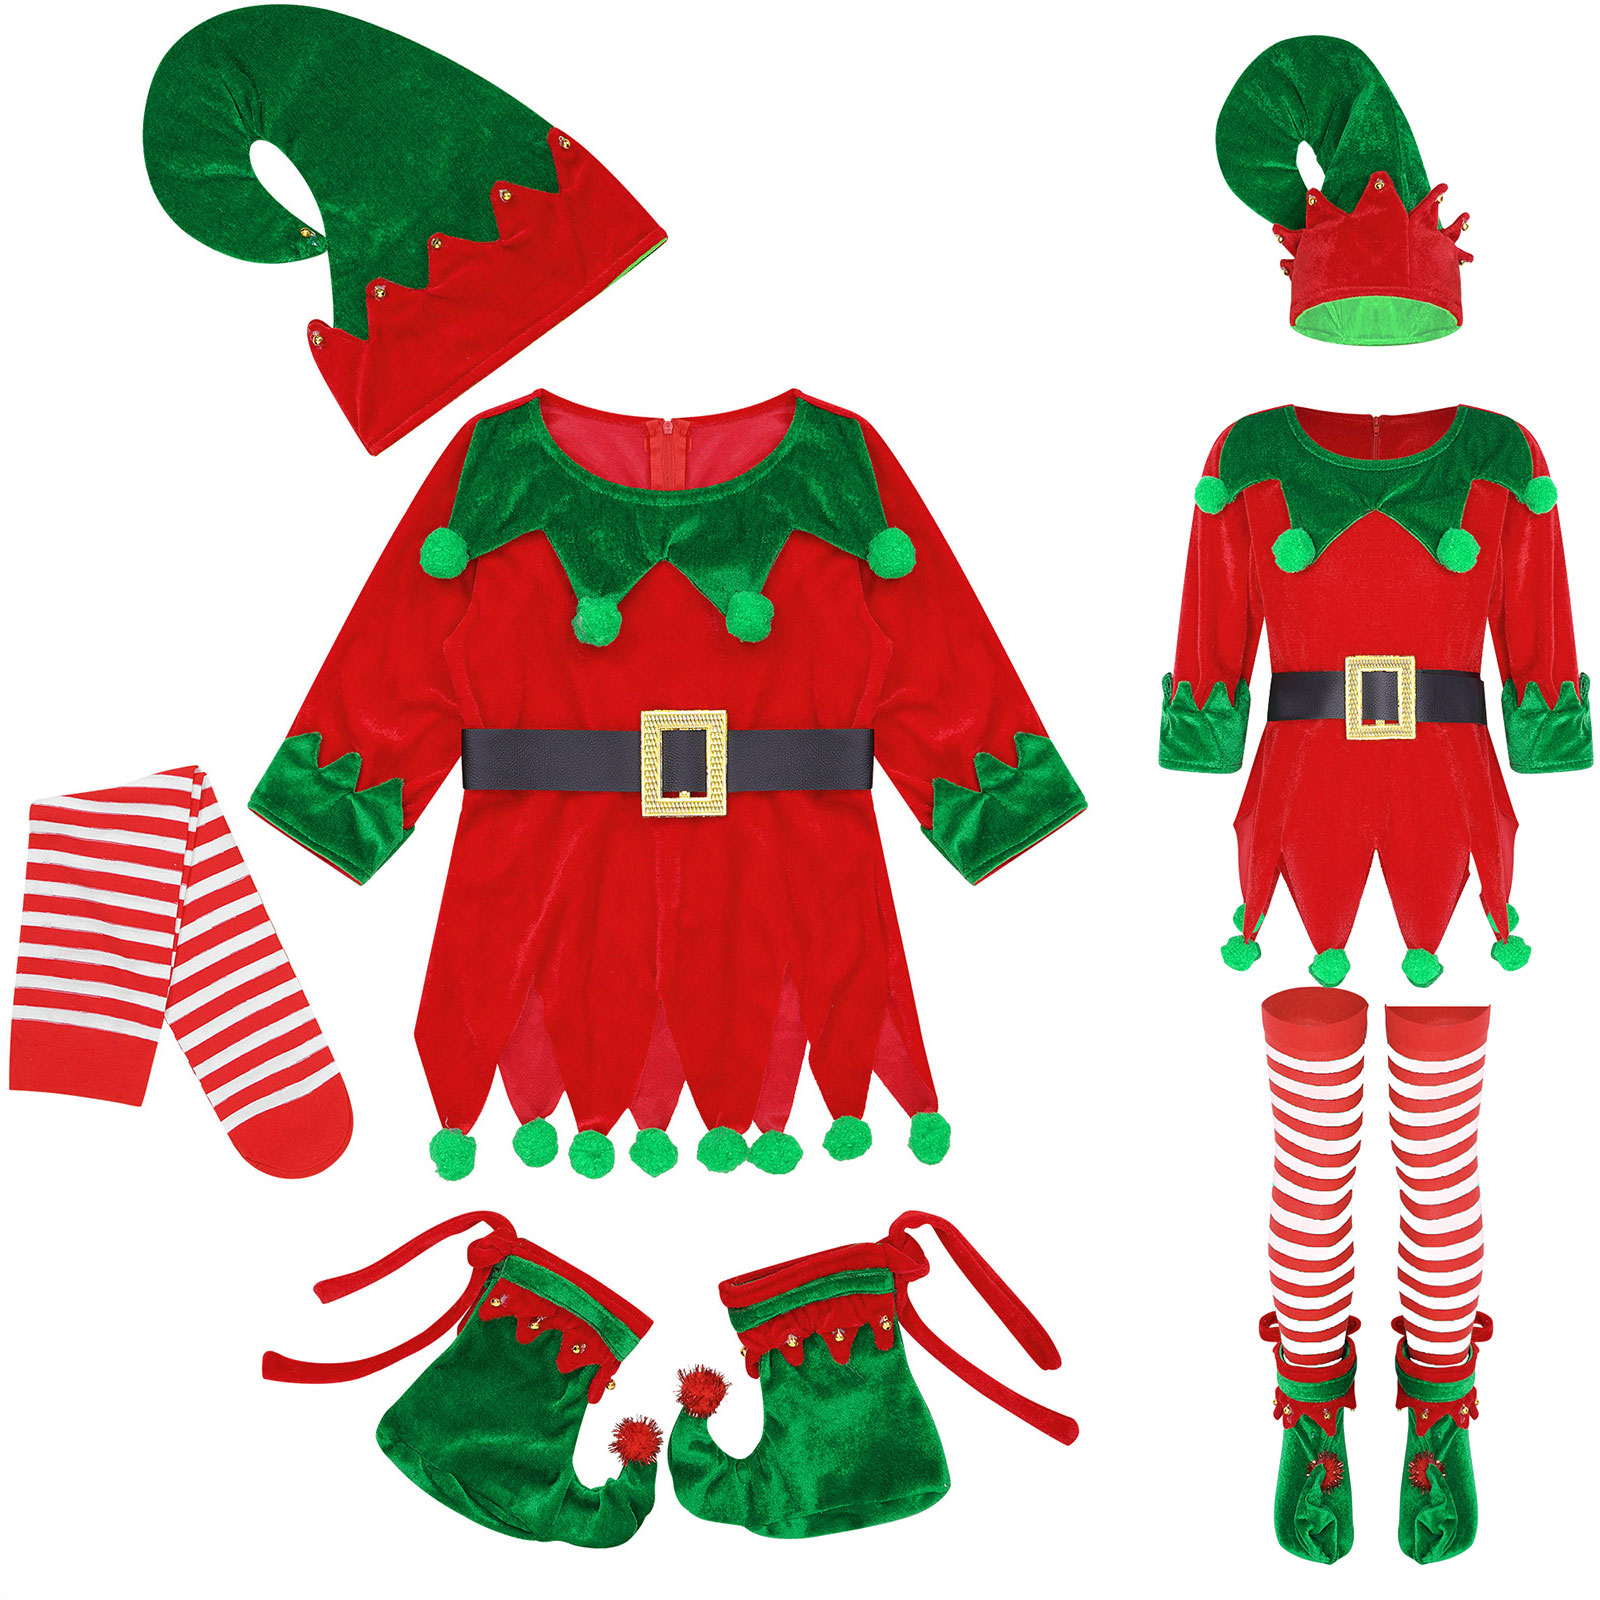 Elf Outfit Clipart Clothing Elf Clip Art - Transparent Background ...